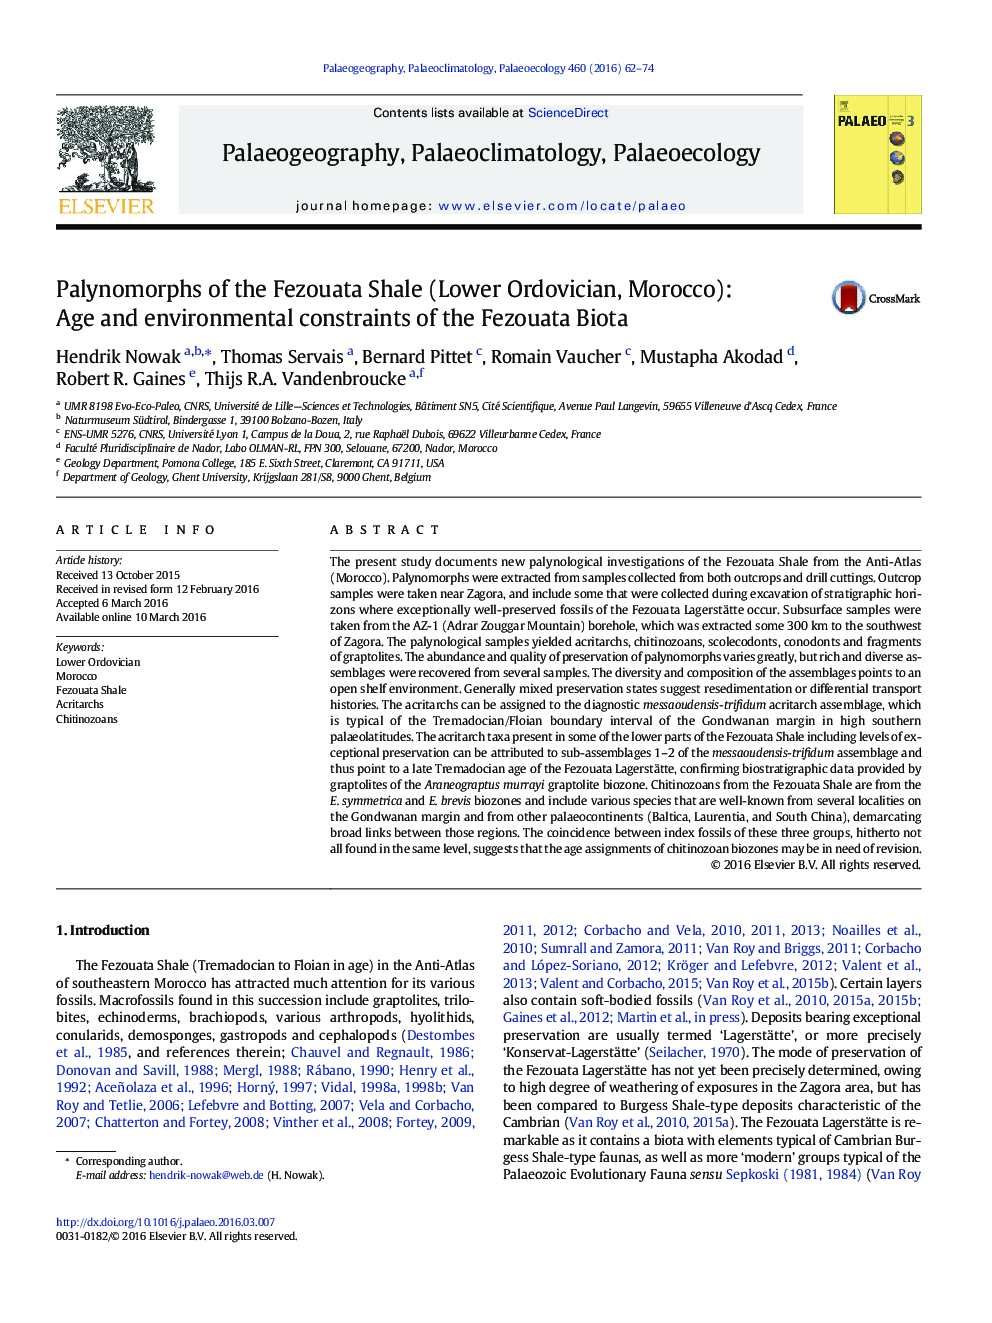 Palynomorphs of the Fezouata Shale (Lower Ordovician, Morocco): Age and environmental constraints of the Fezouata Biota